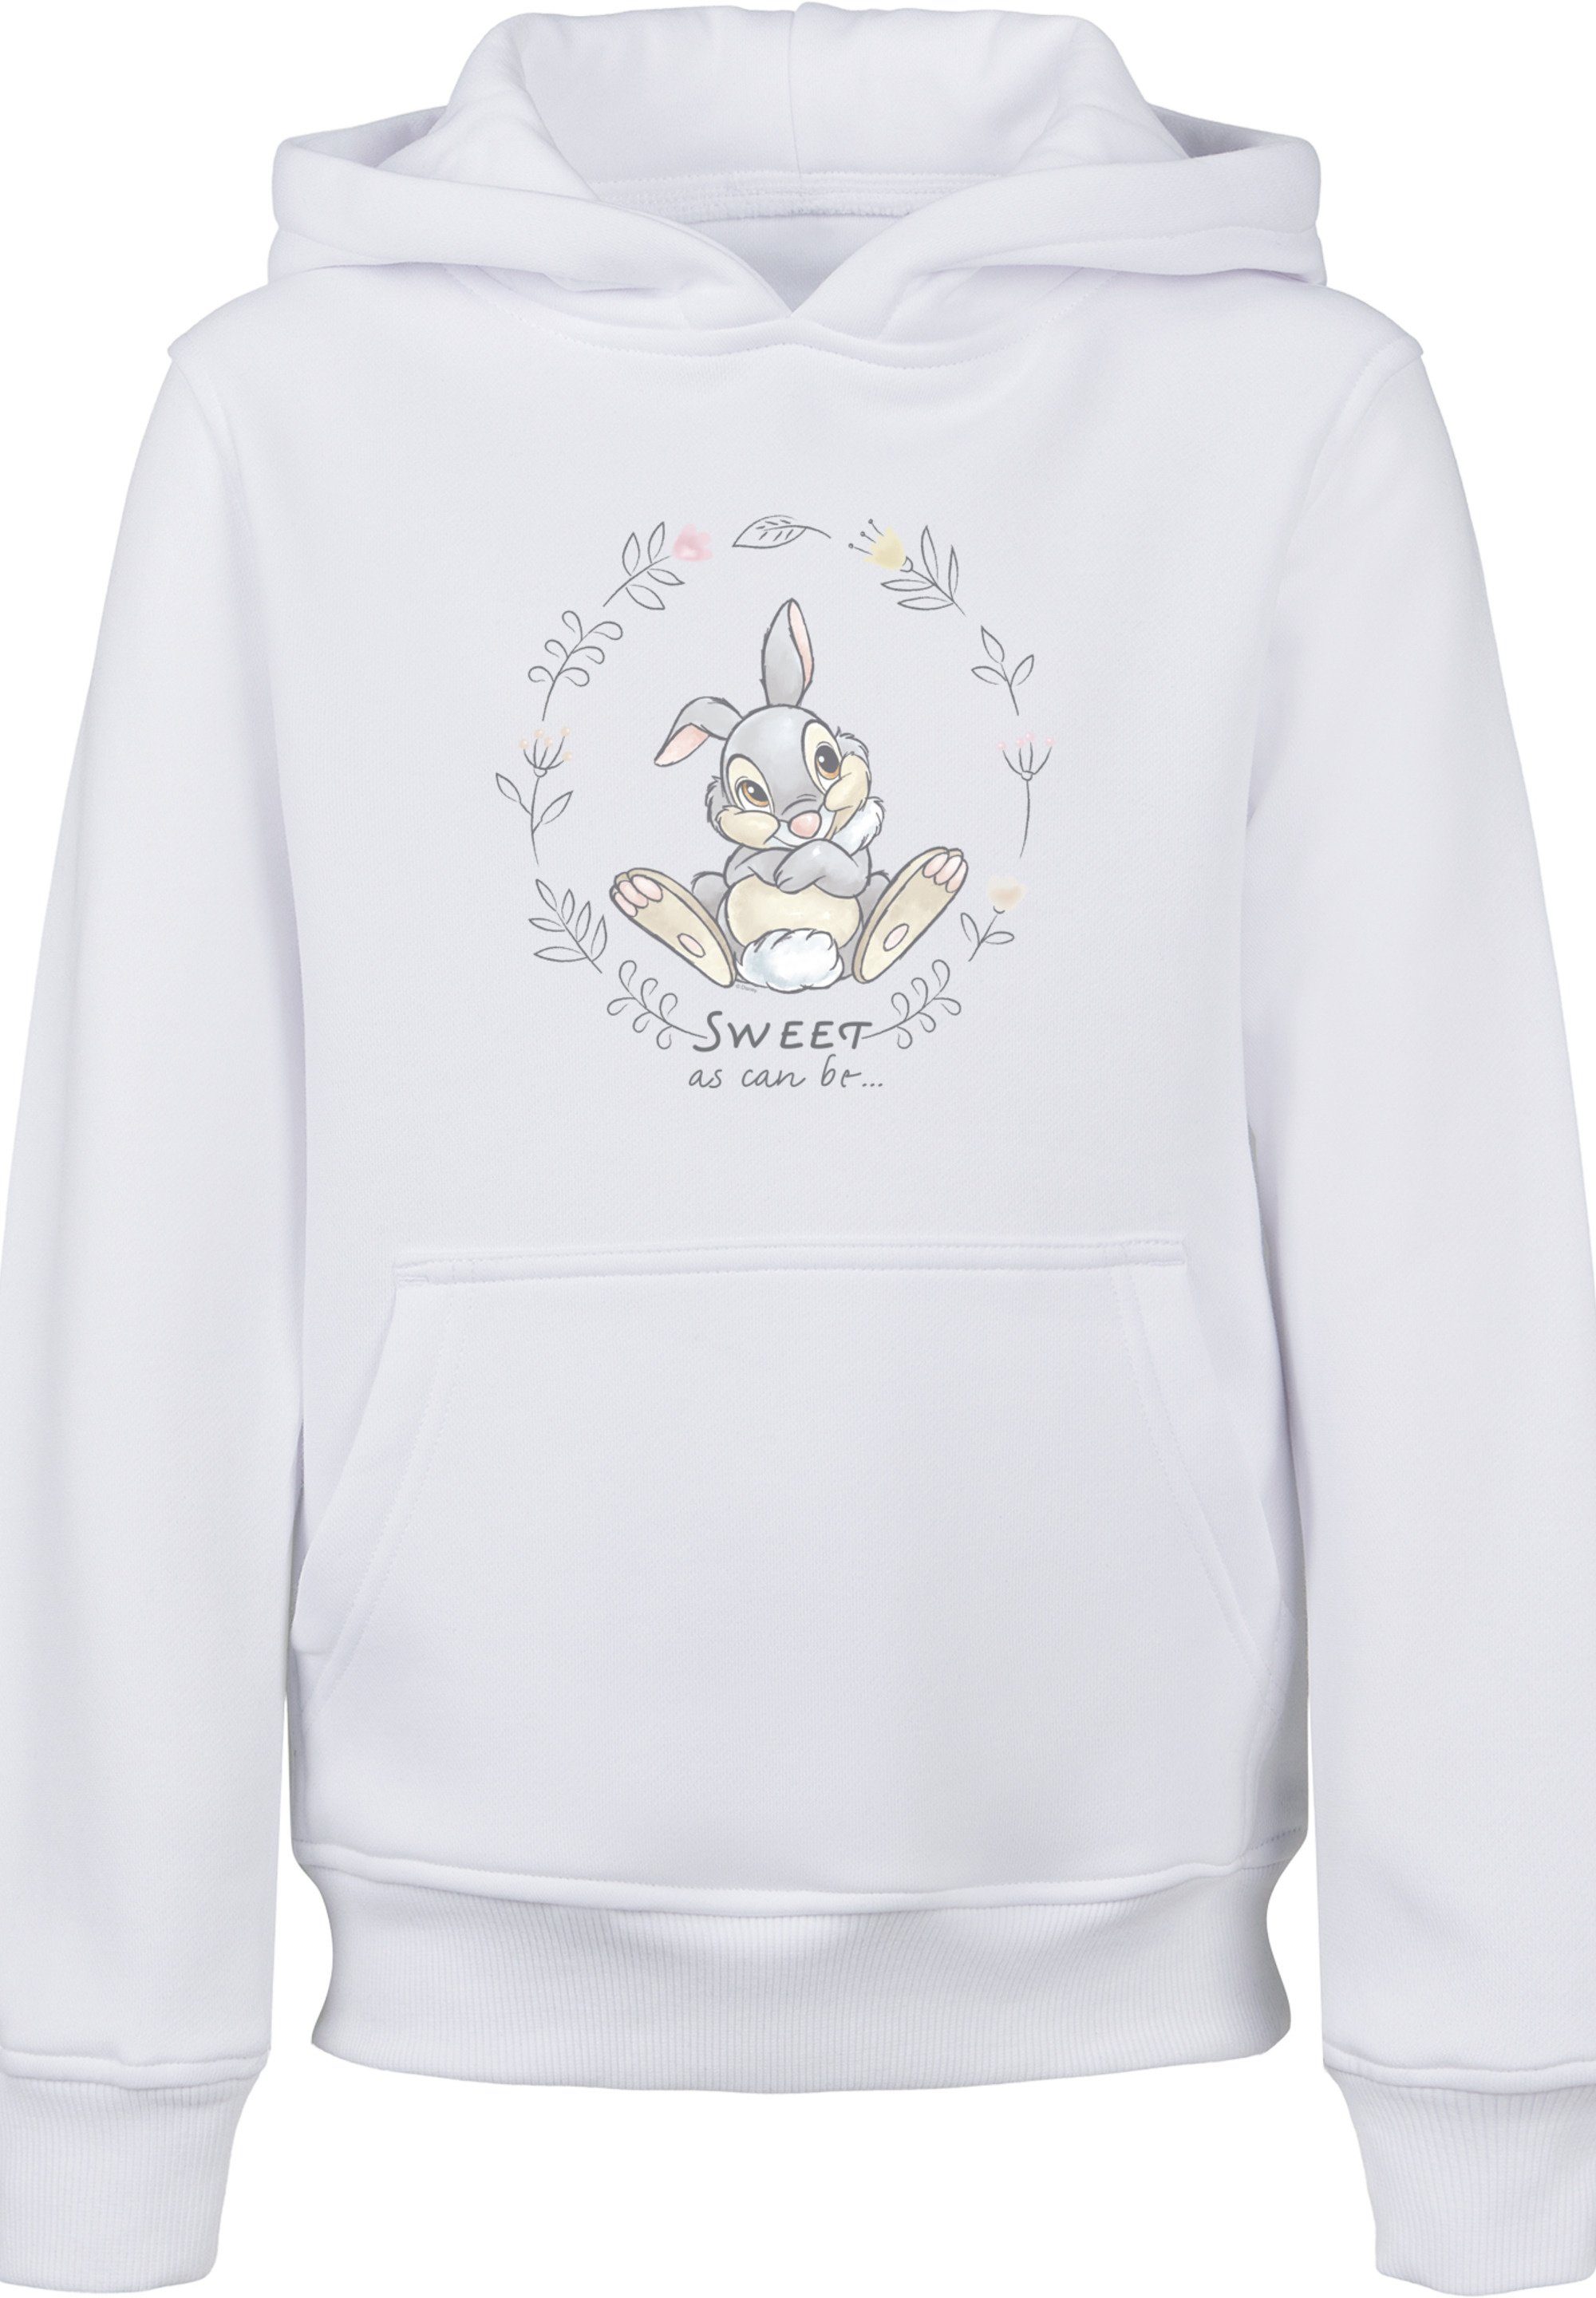 F4NT4STIC Kapuzenpullover Print Thumper Bambi weiß Disney Be Sweet As Klopfer Can